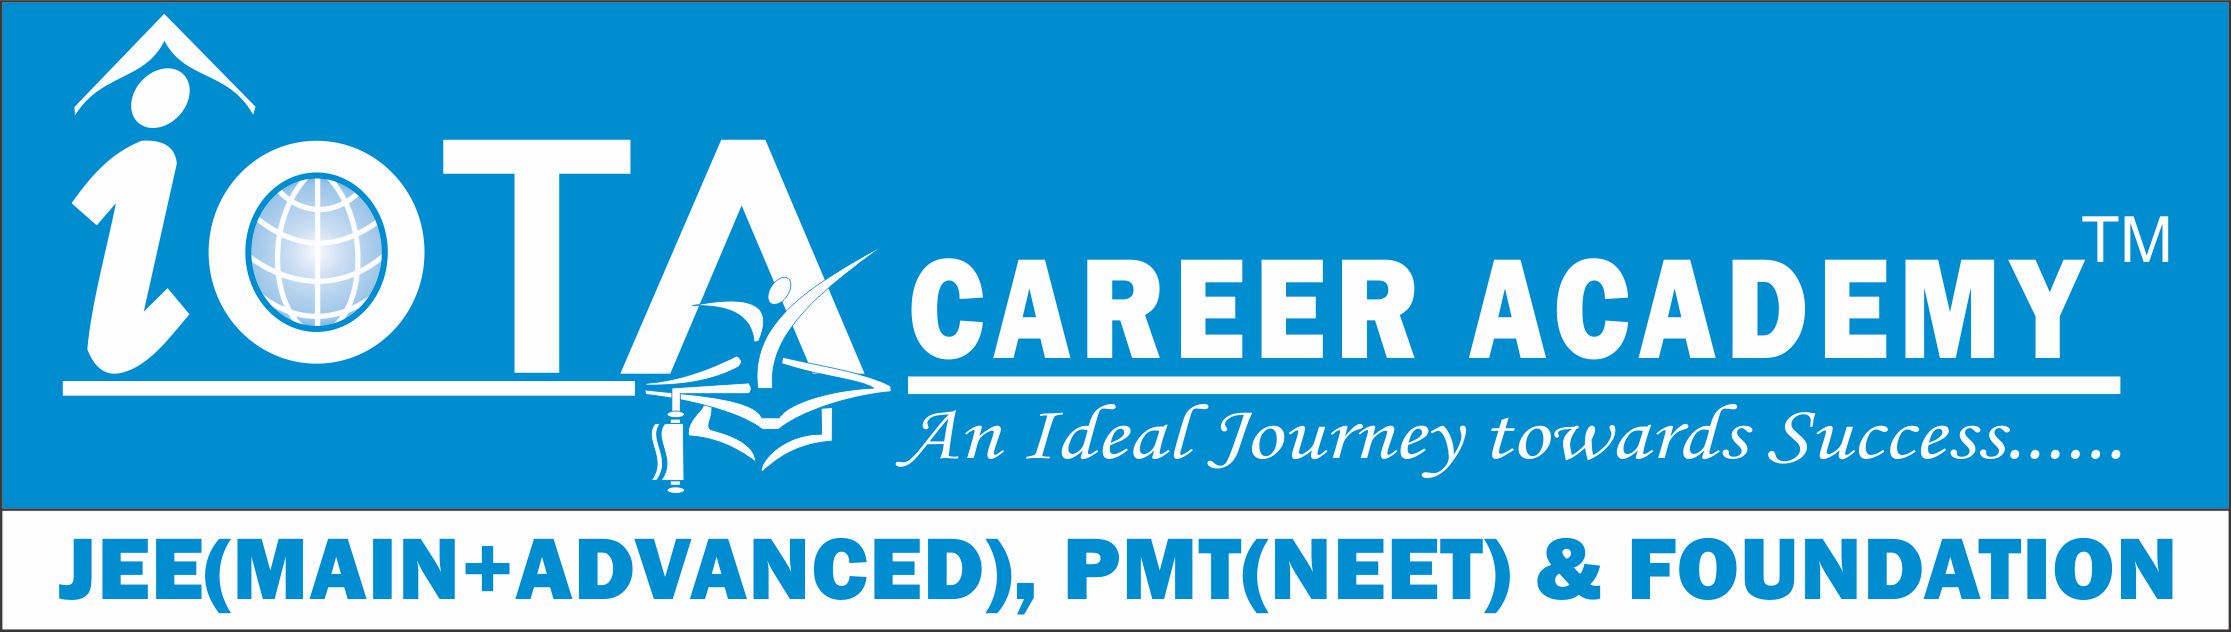 IOTA Career Academy - Rajpur Road Dehradun